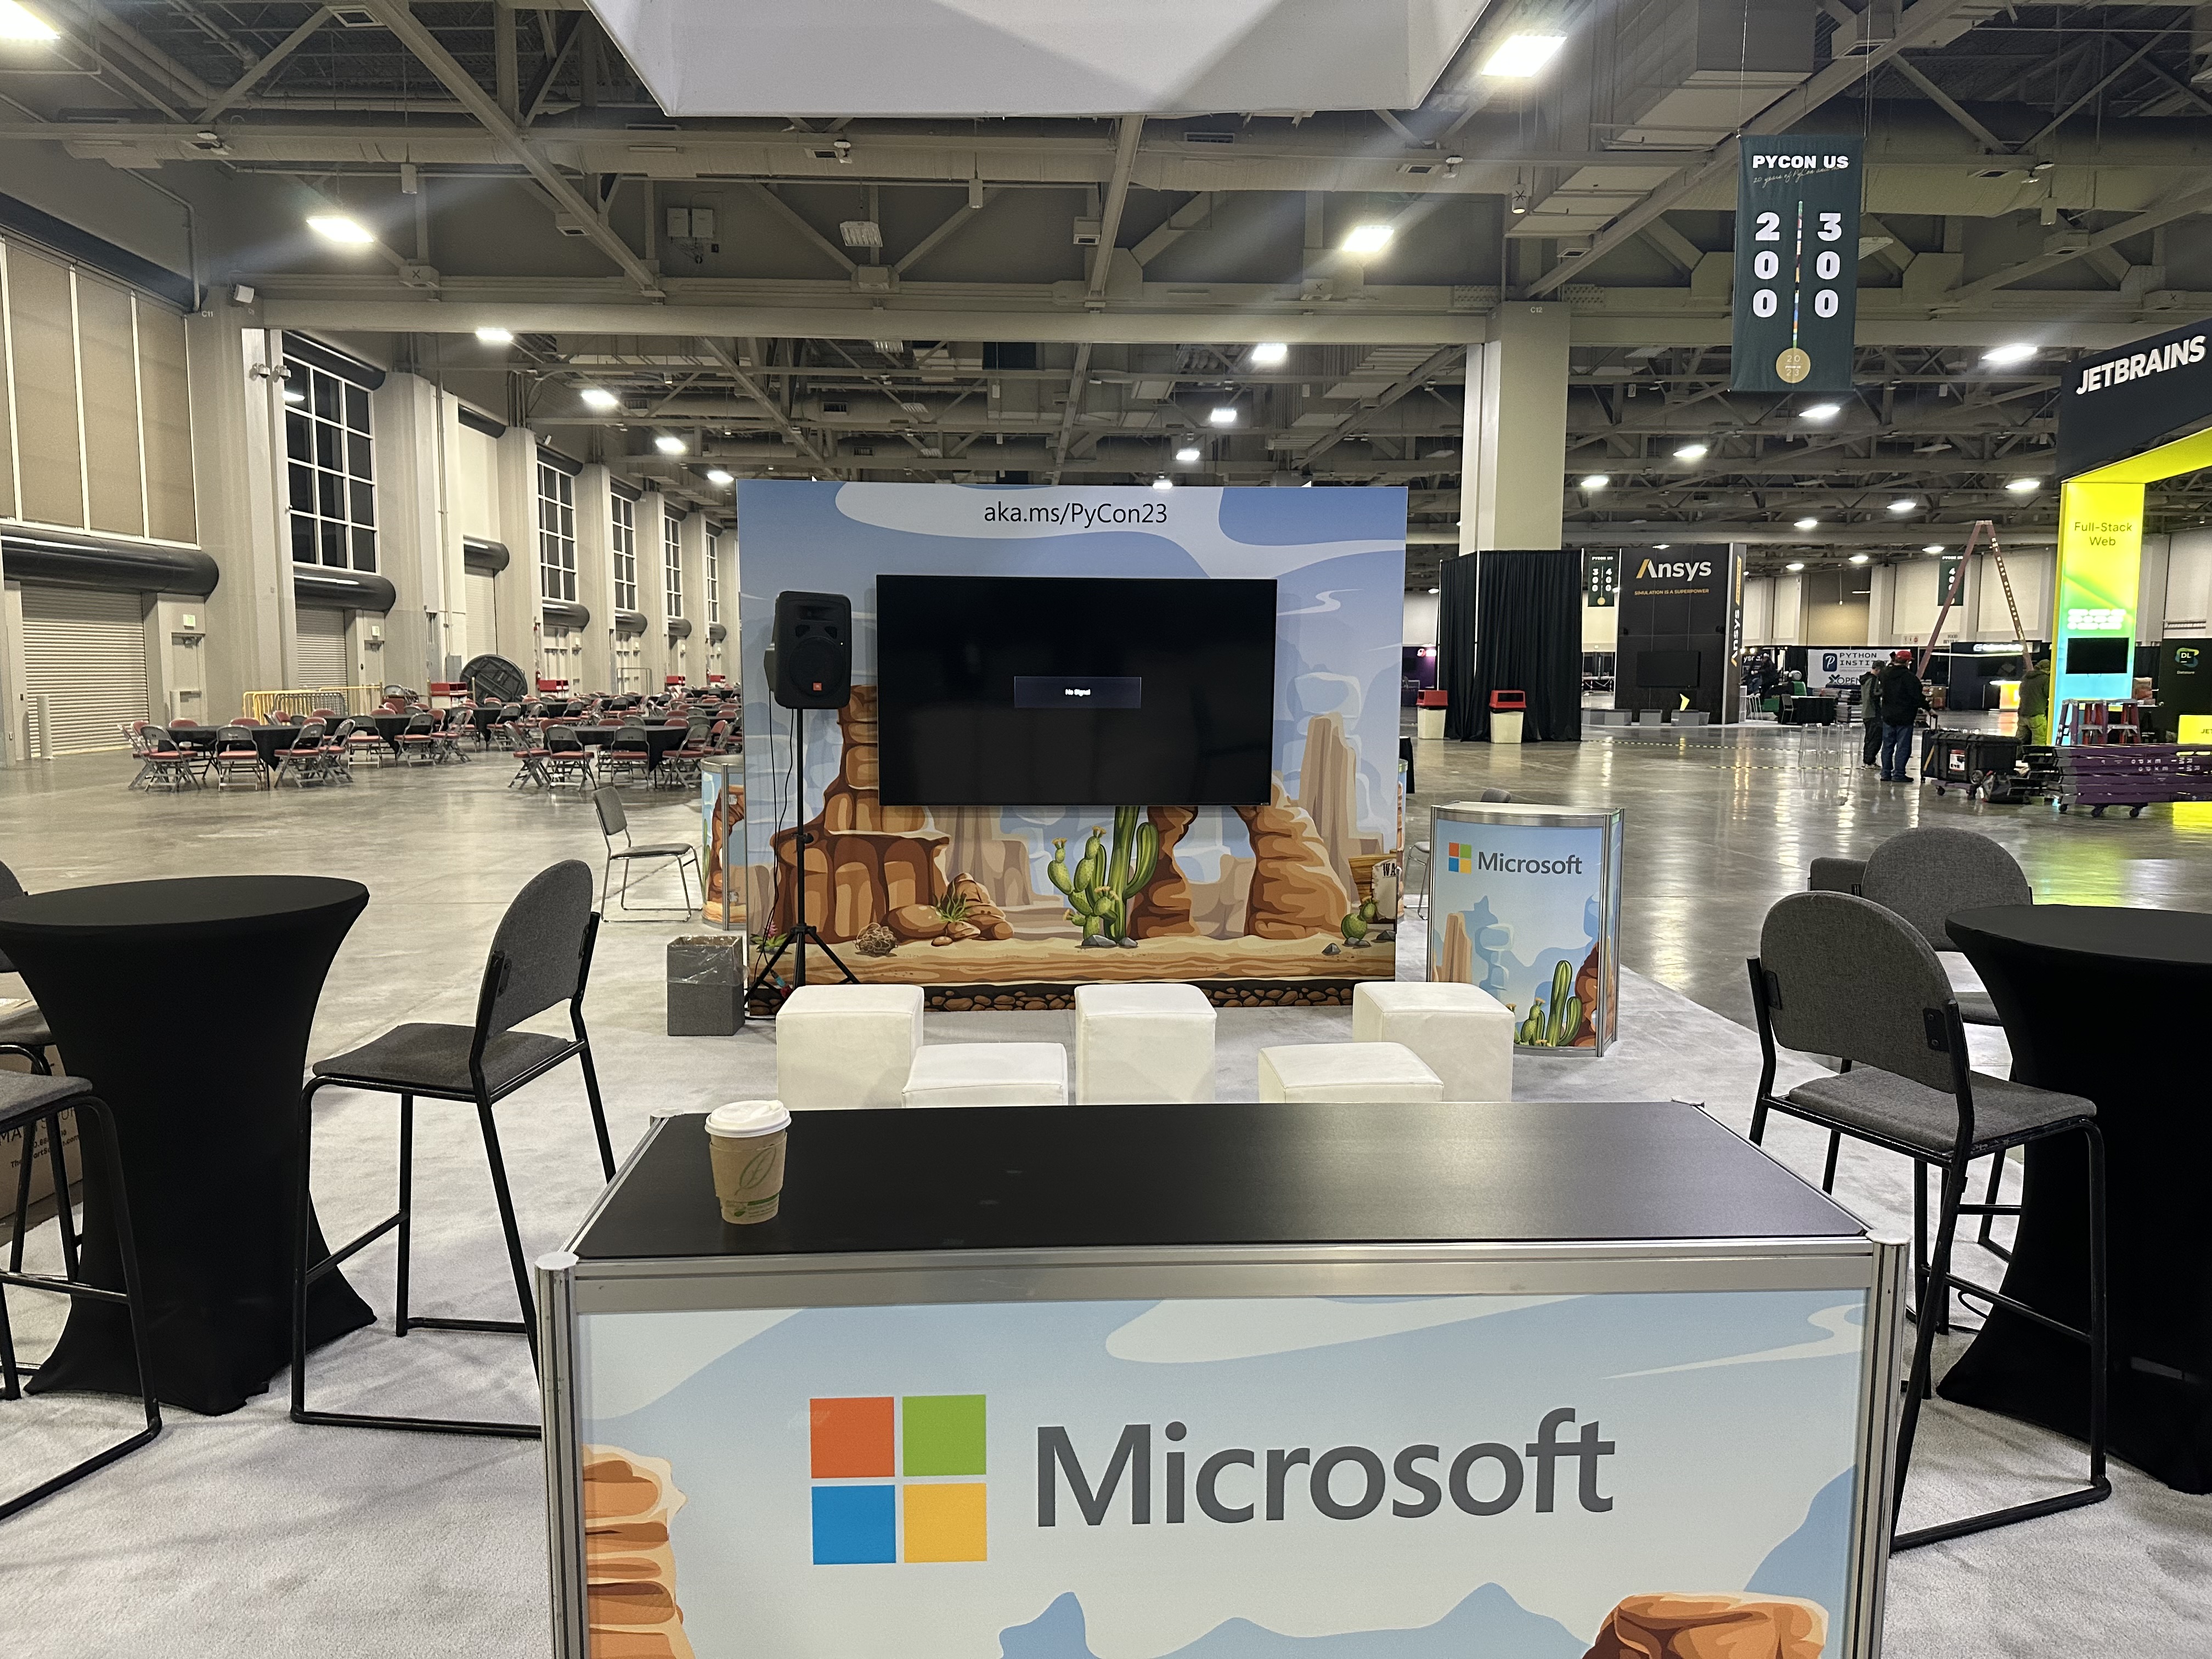 The Microsoft Booth Pre-PyCon